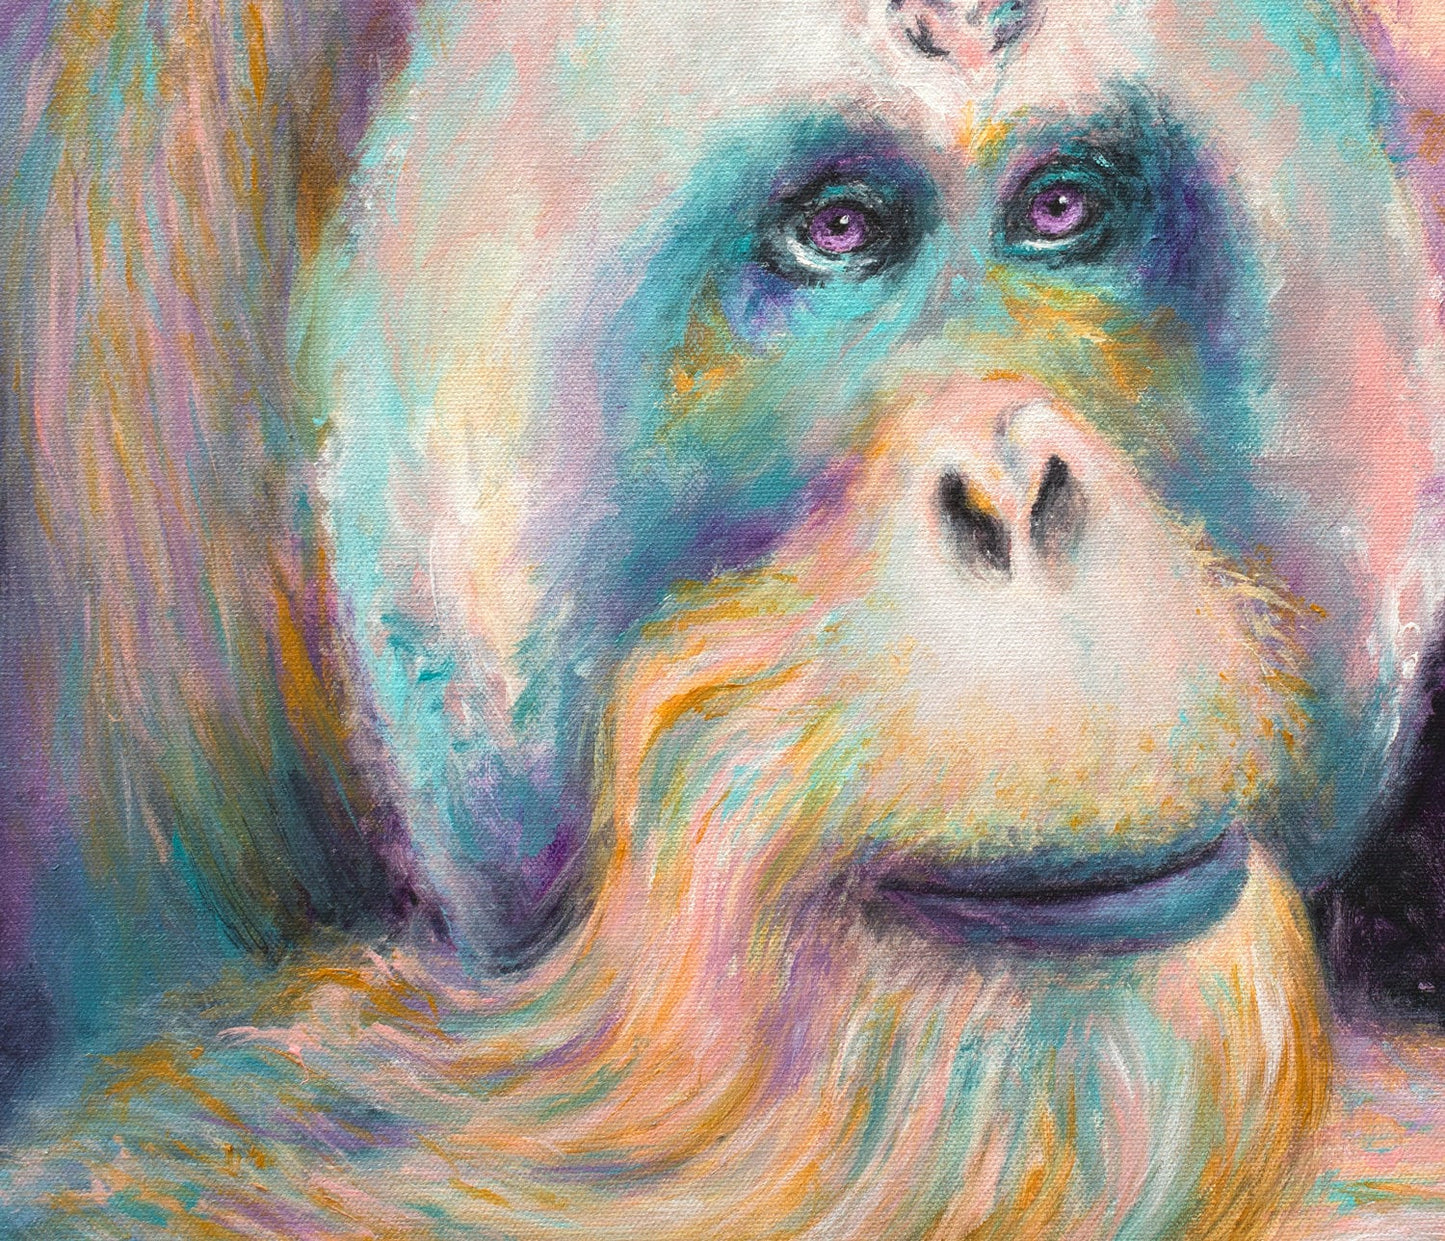 Orangutan Painting - 16x20"